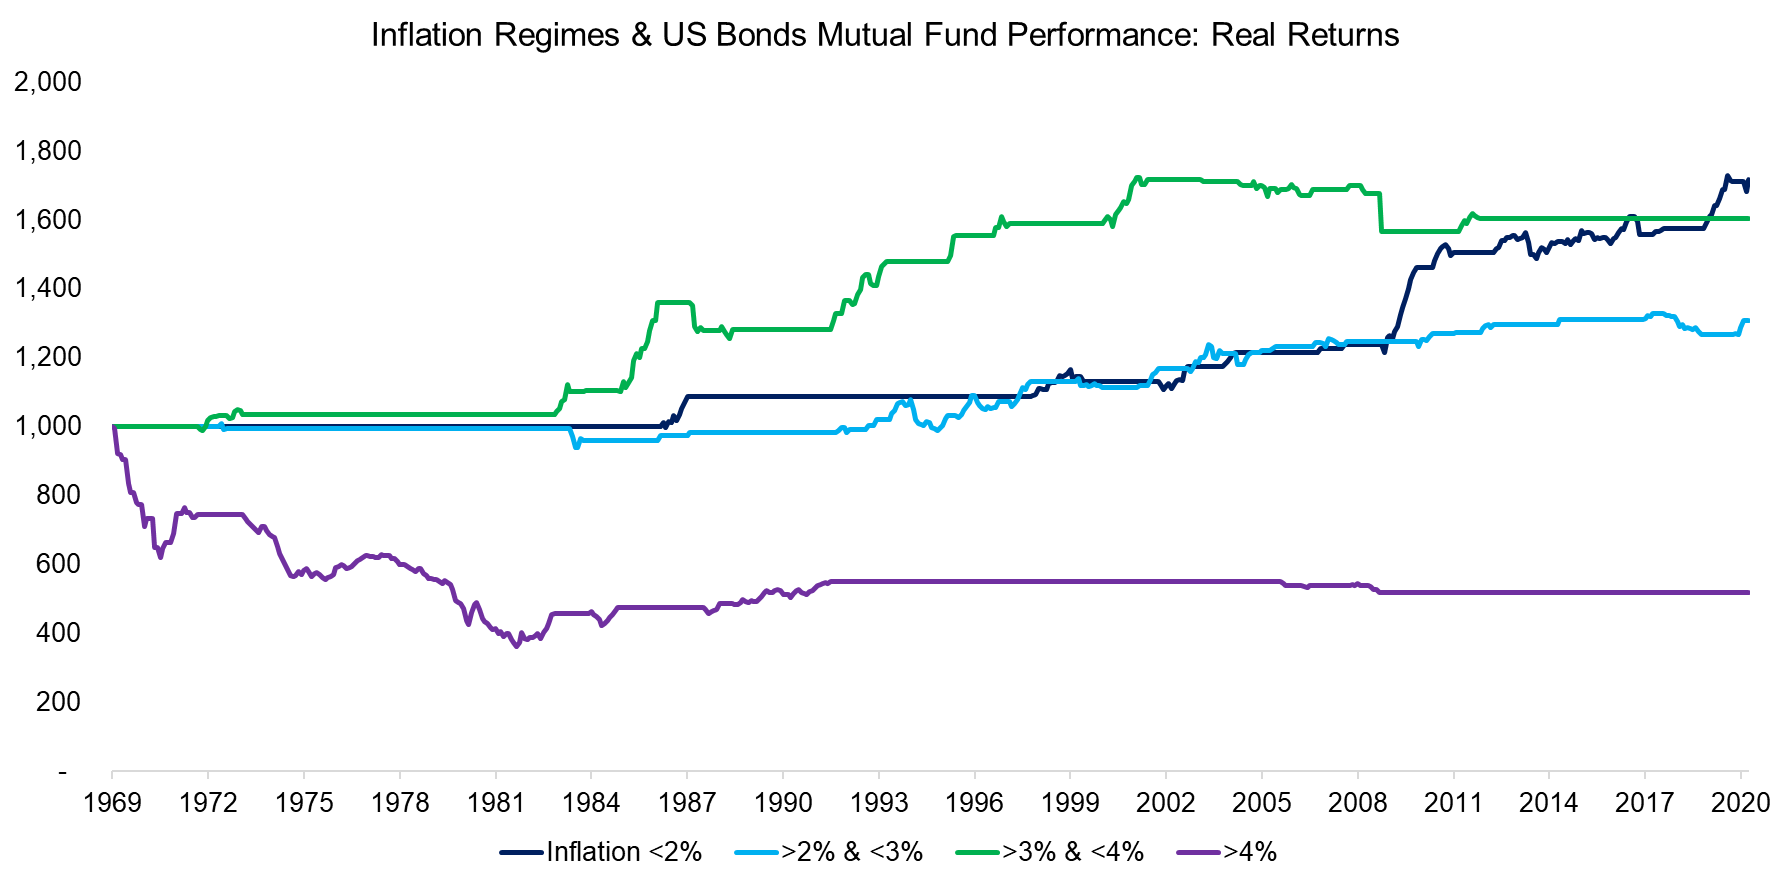 Inflation Regimes & US Bonds Mutual Fund Performance Real Returns